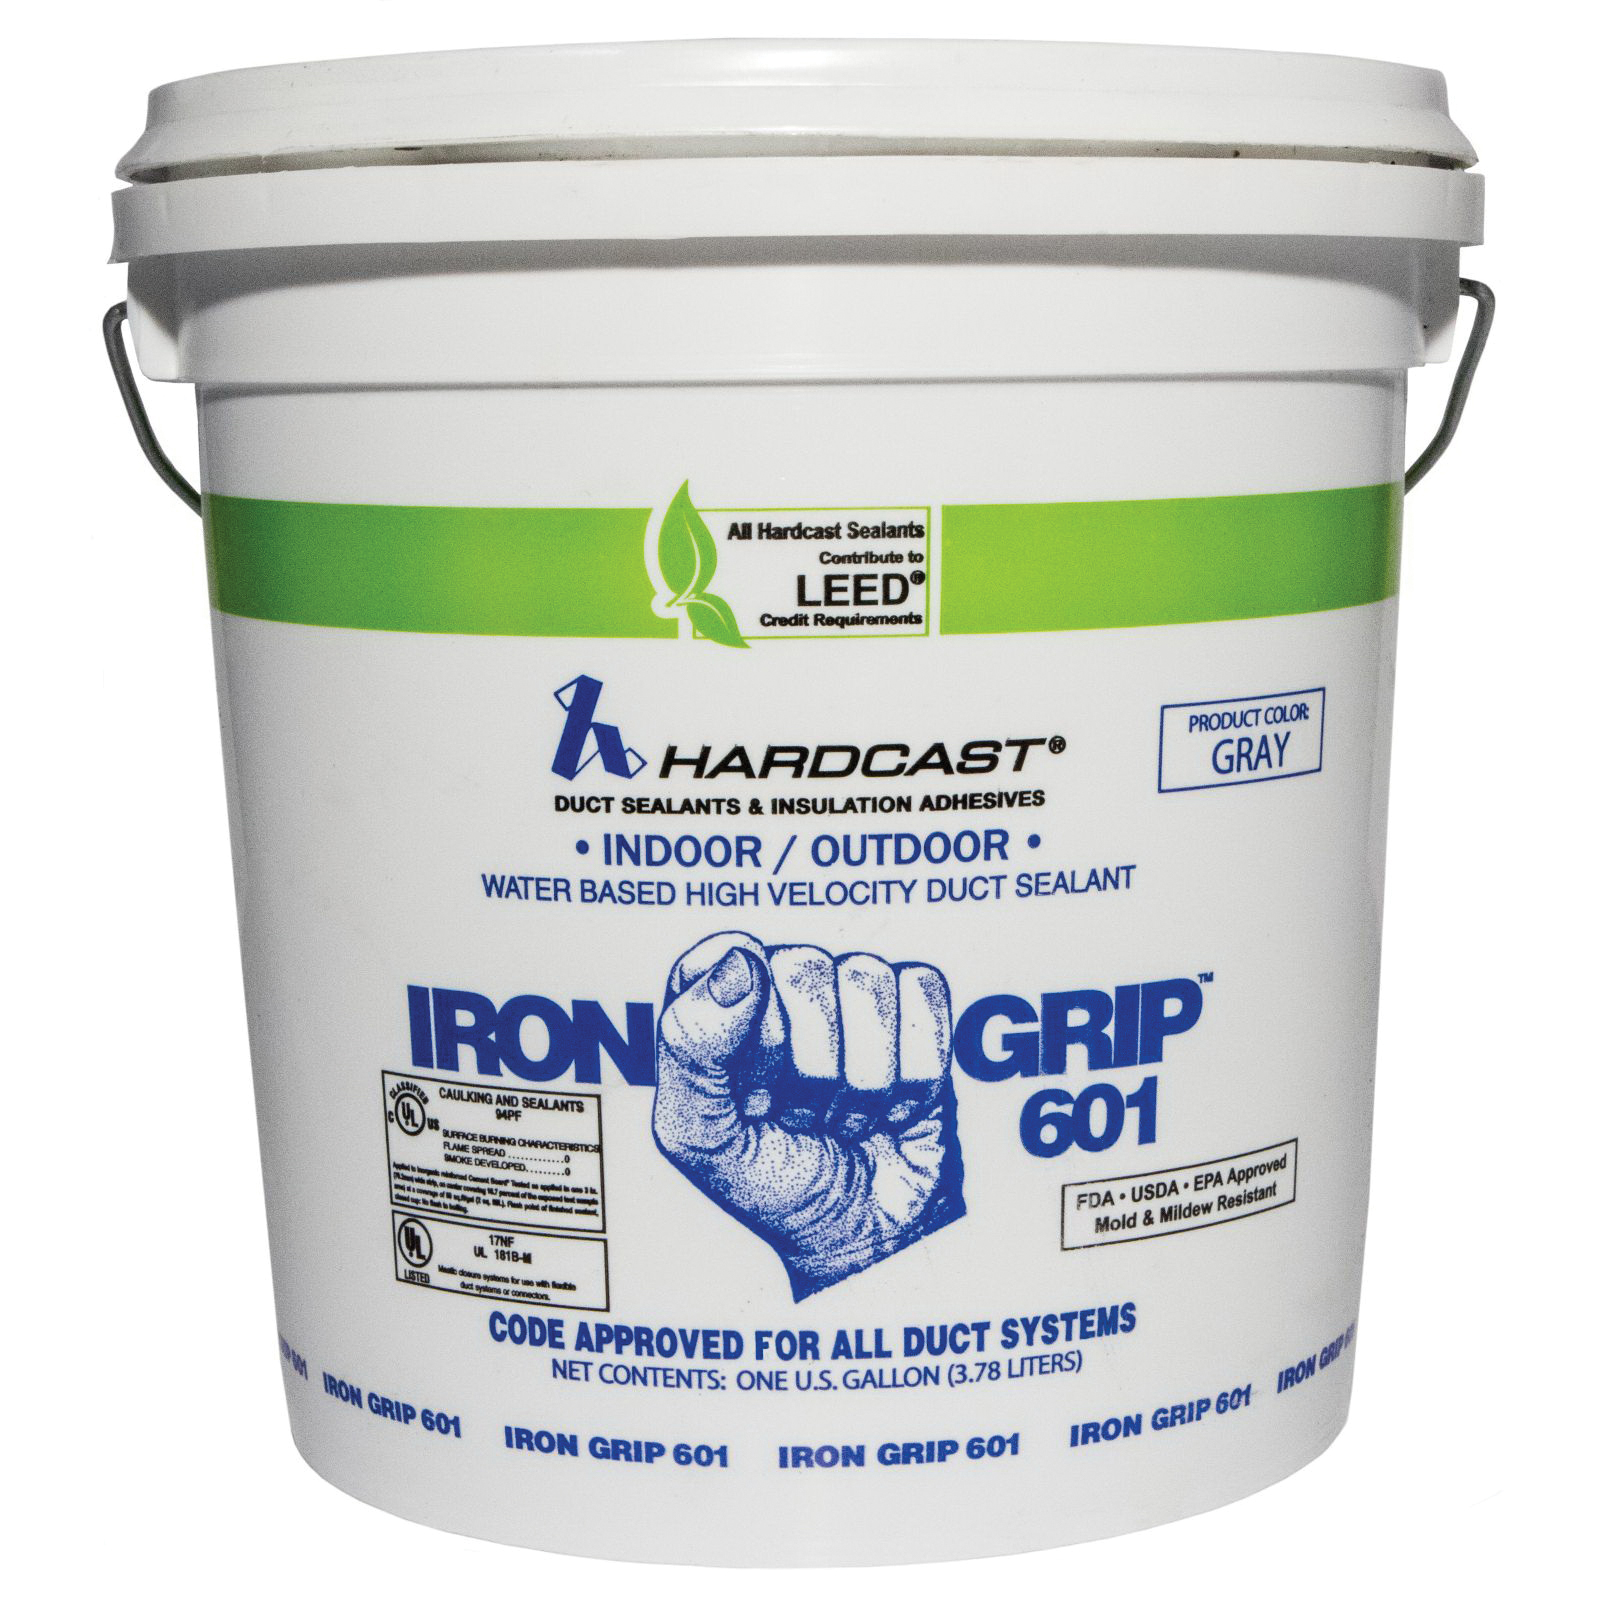 CARLISLE® Iron-Grip 601 304135 Water Based Duct Sealant, 1 gal, Pail, Liquid, Gray, Slight Ammonia